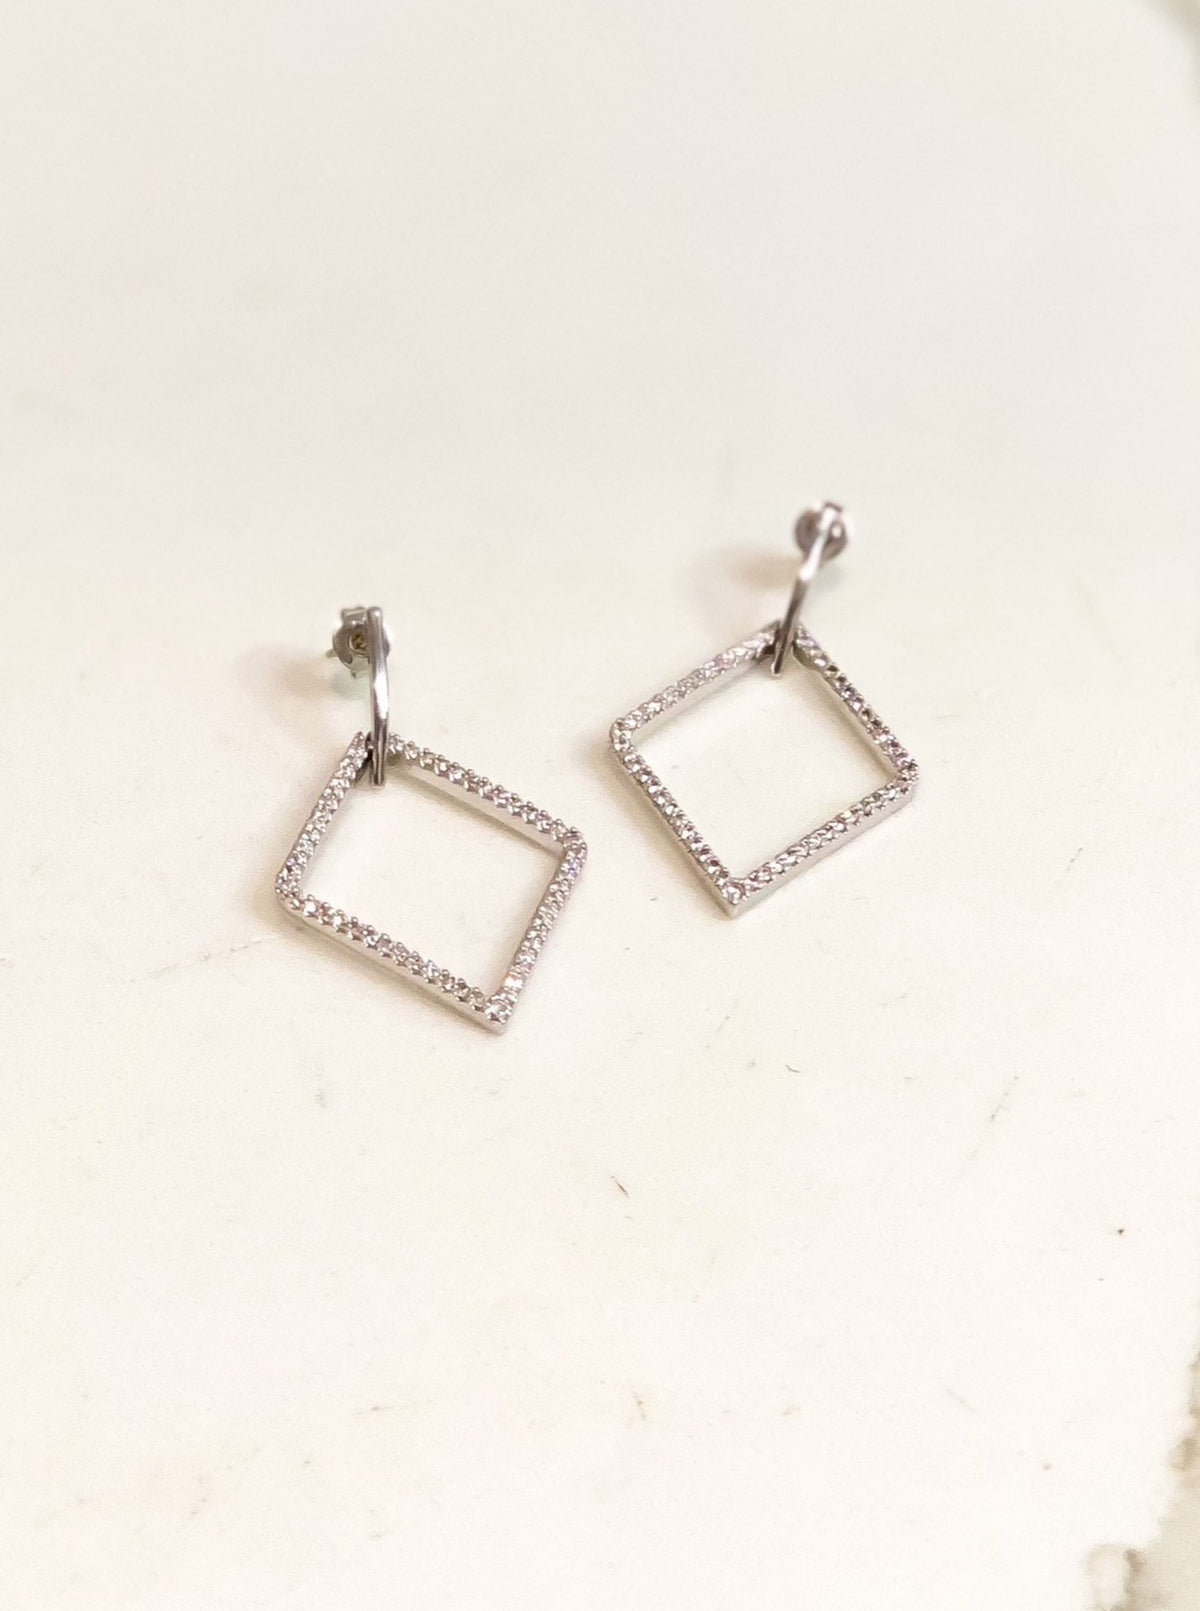 Crystal Diamond Earrings